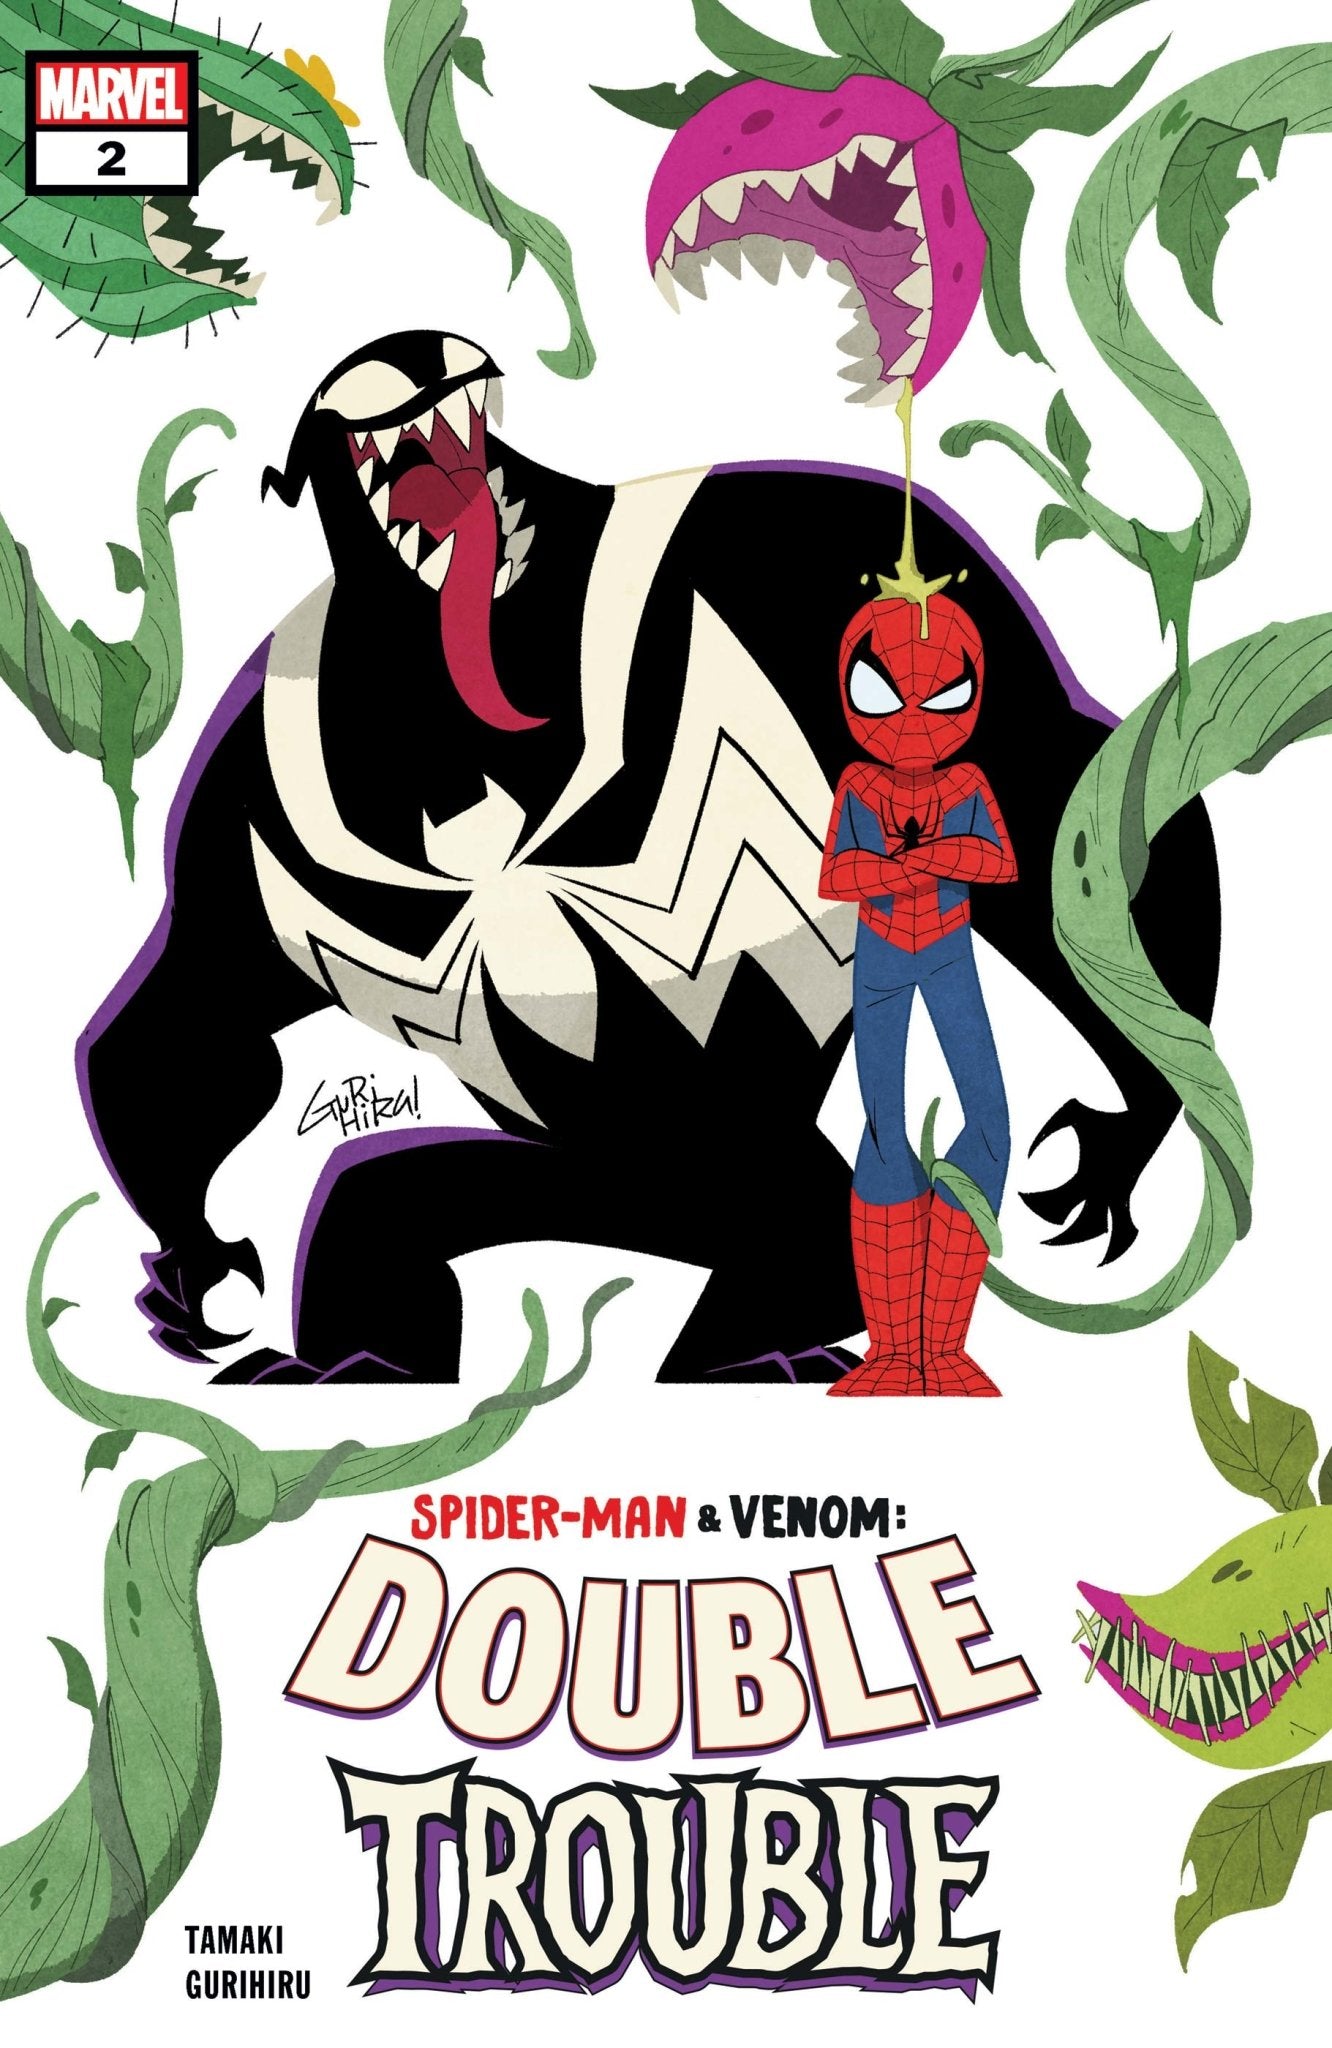 SPIDER-MAN & VENOM : DOUBLE TROUBLE #2 - The Comic Construct